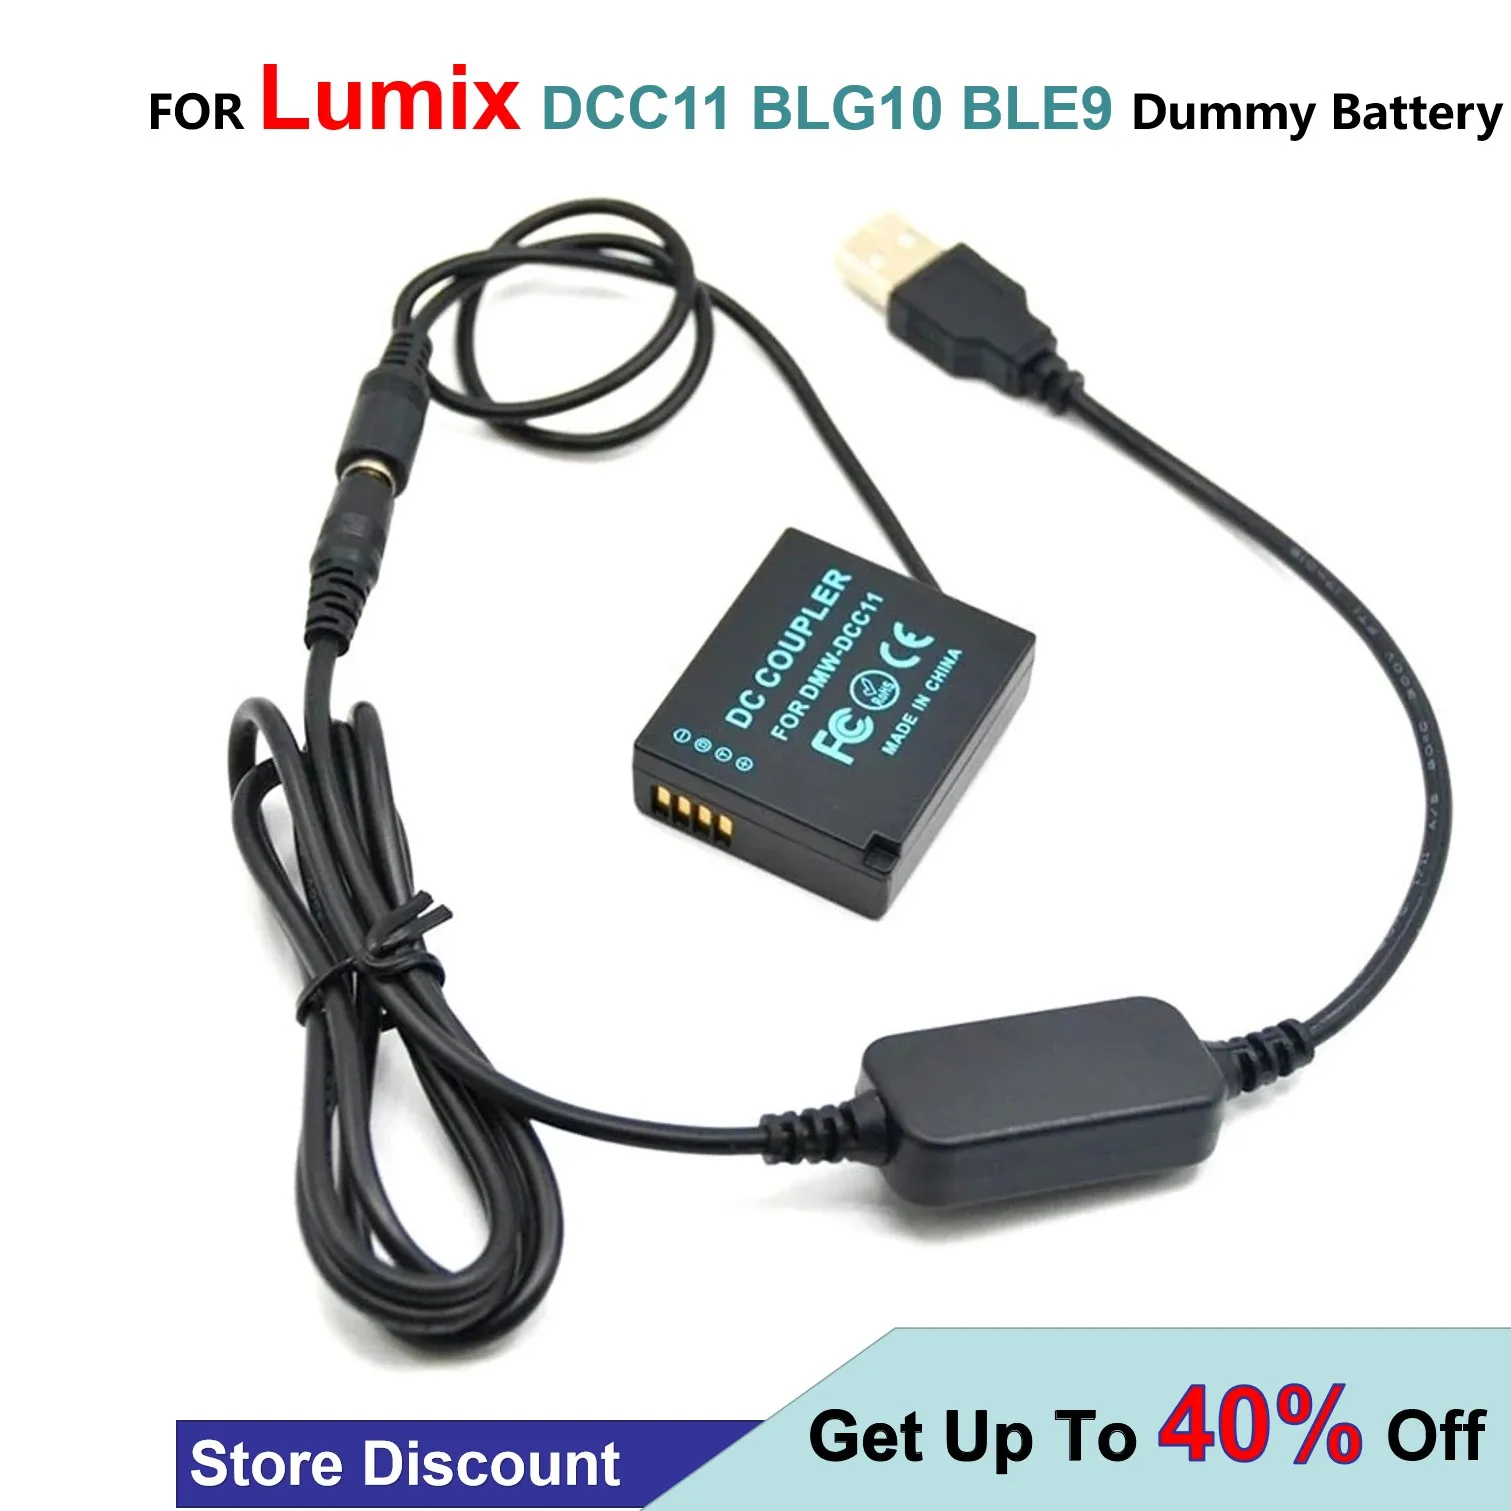 

DCC11 DMW-BLG10 BLE9 Dummy Battery+Power Bank 5V USB Adapter For Lumix DMC-GF6 GF5 GF3 GF3K GX7 GX9 S6 ZS100 LX100 GX80 GX85